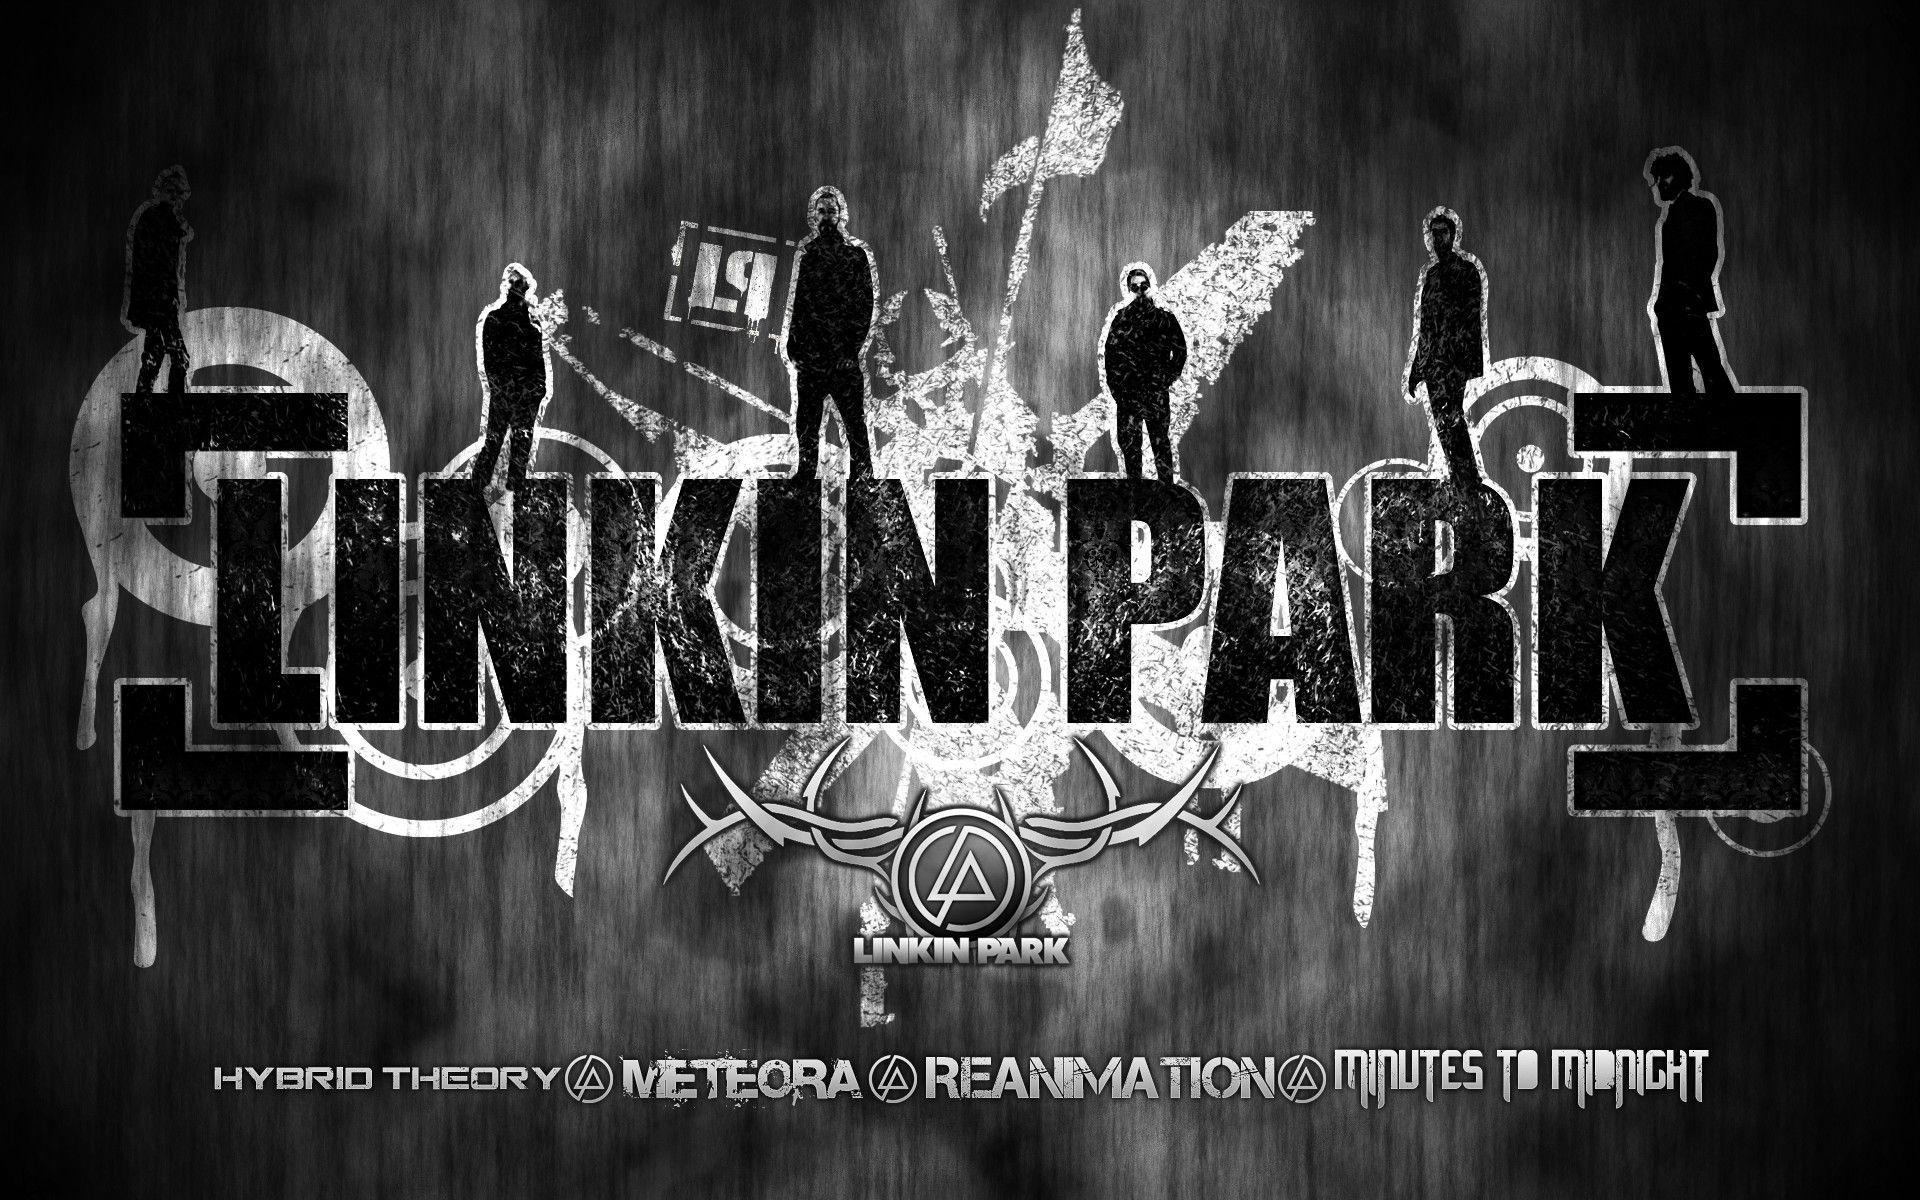 Linkin Park Logo 2018 Wallpaper background picture